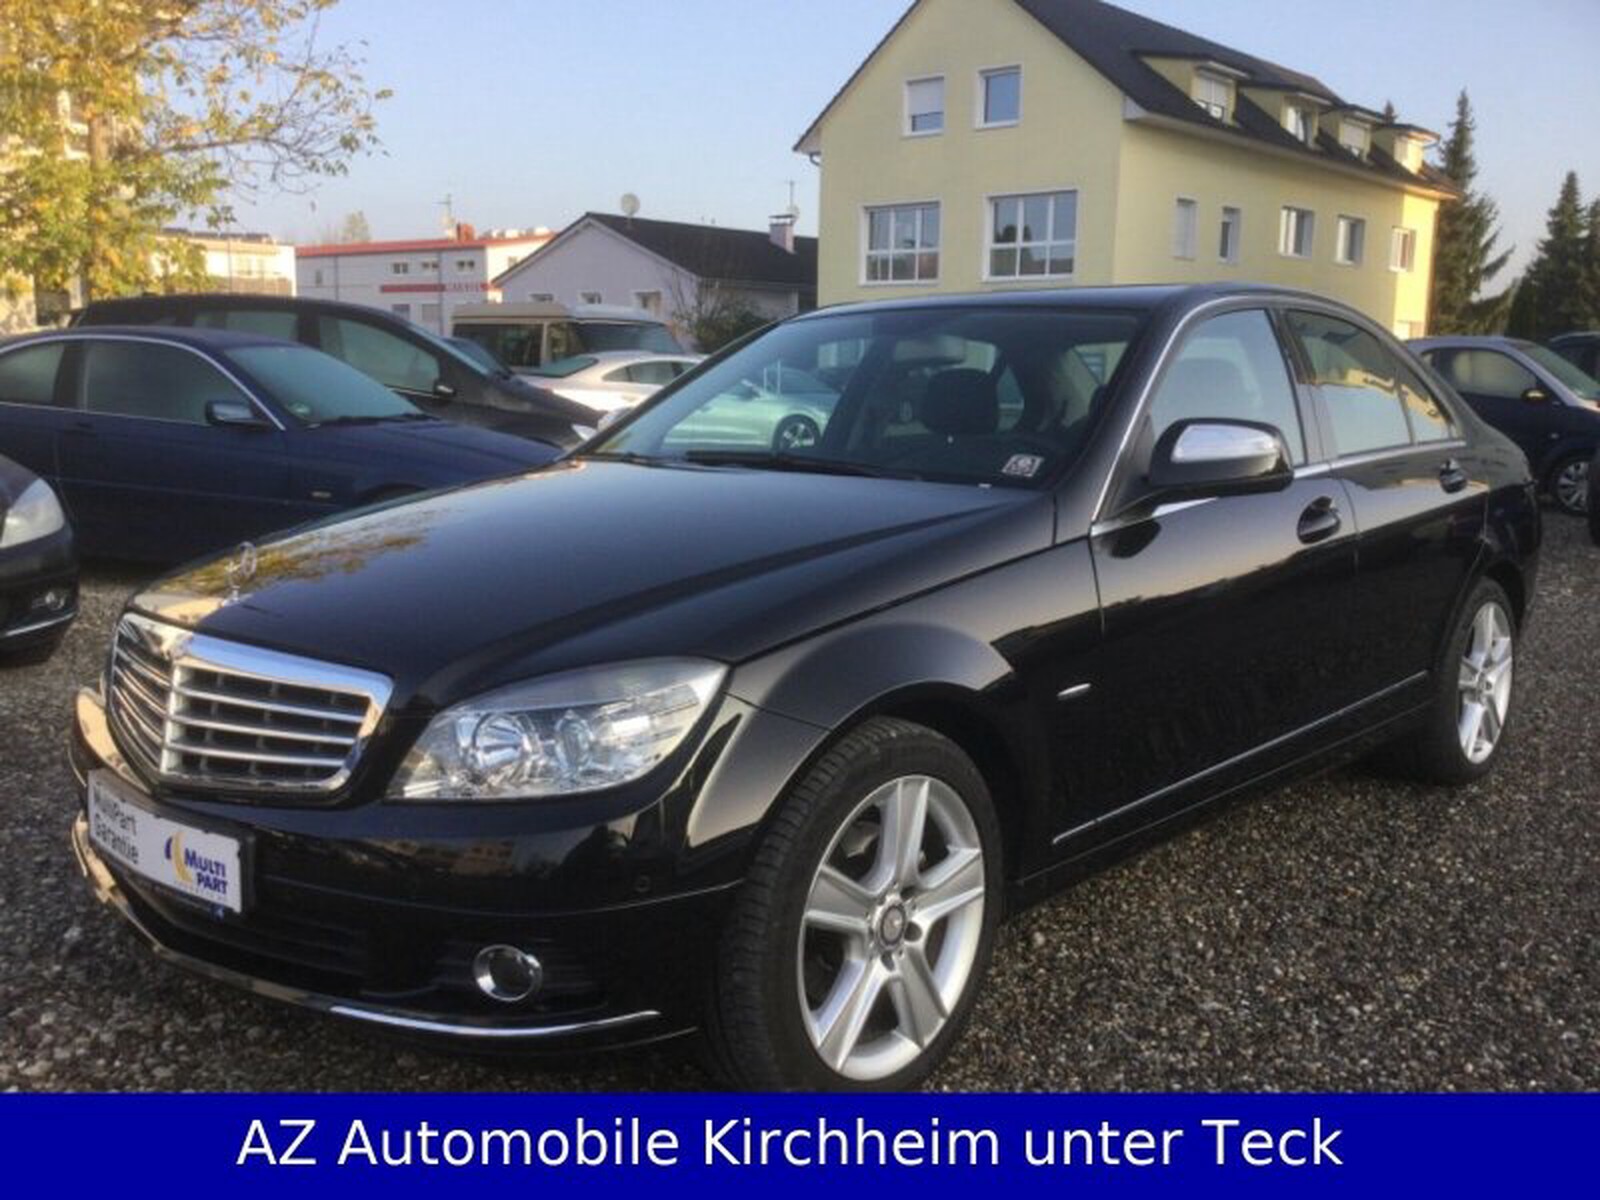 Mercedes-Benz C 220 gebraucht kaufen in Kirchheim Teck - Int.Nr.: MB C220  CDI BJ2007 VERKAUFT